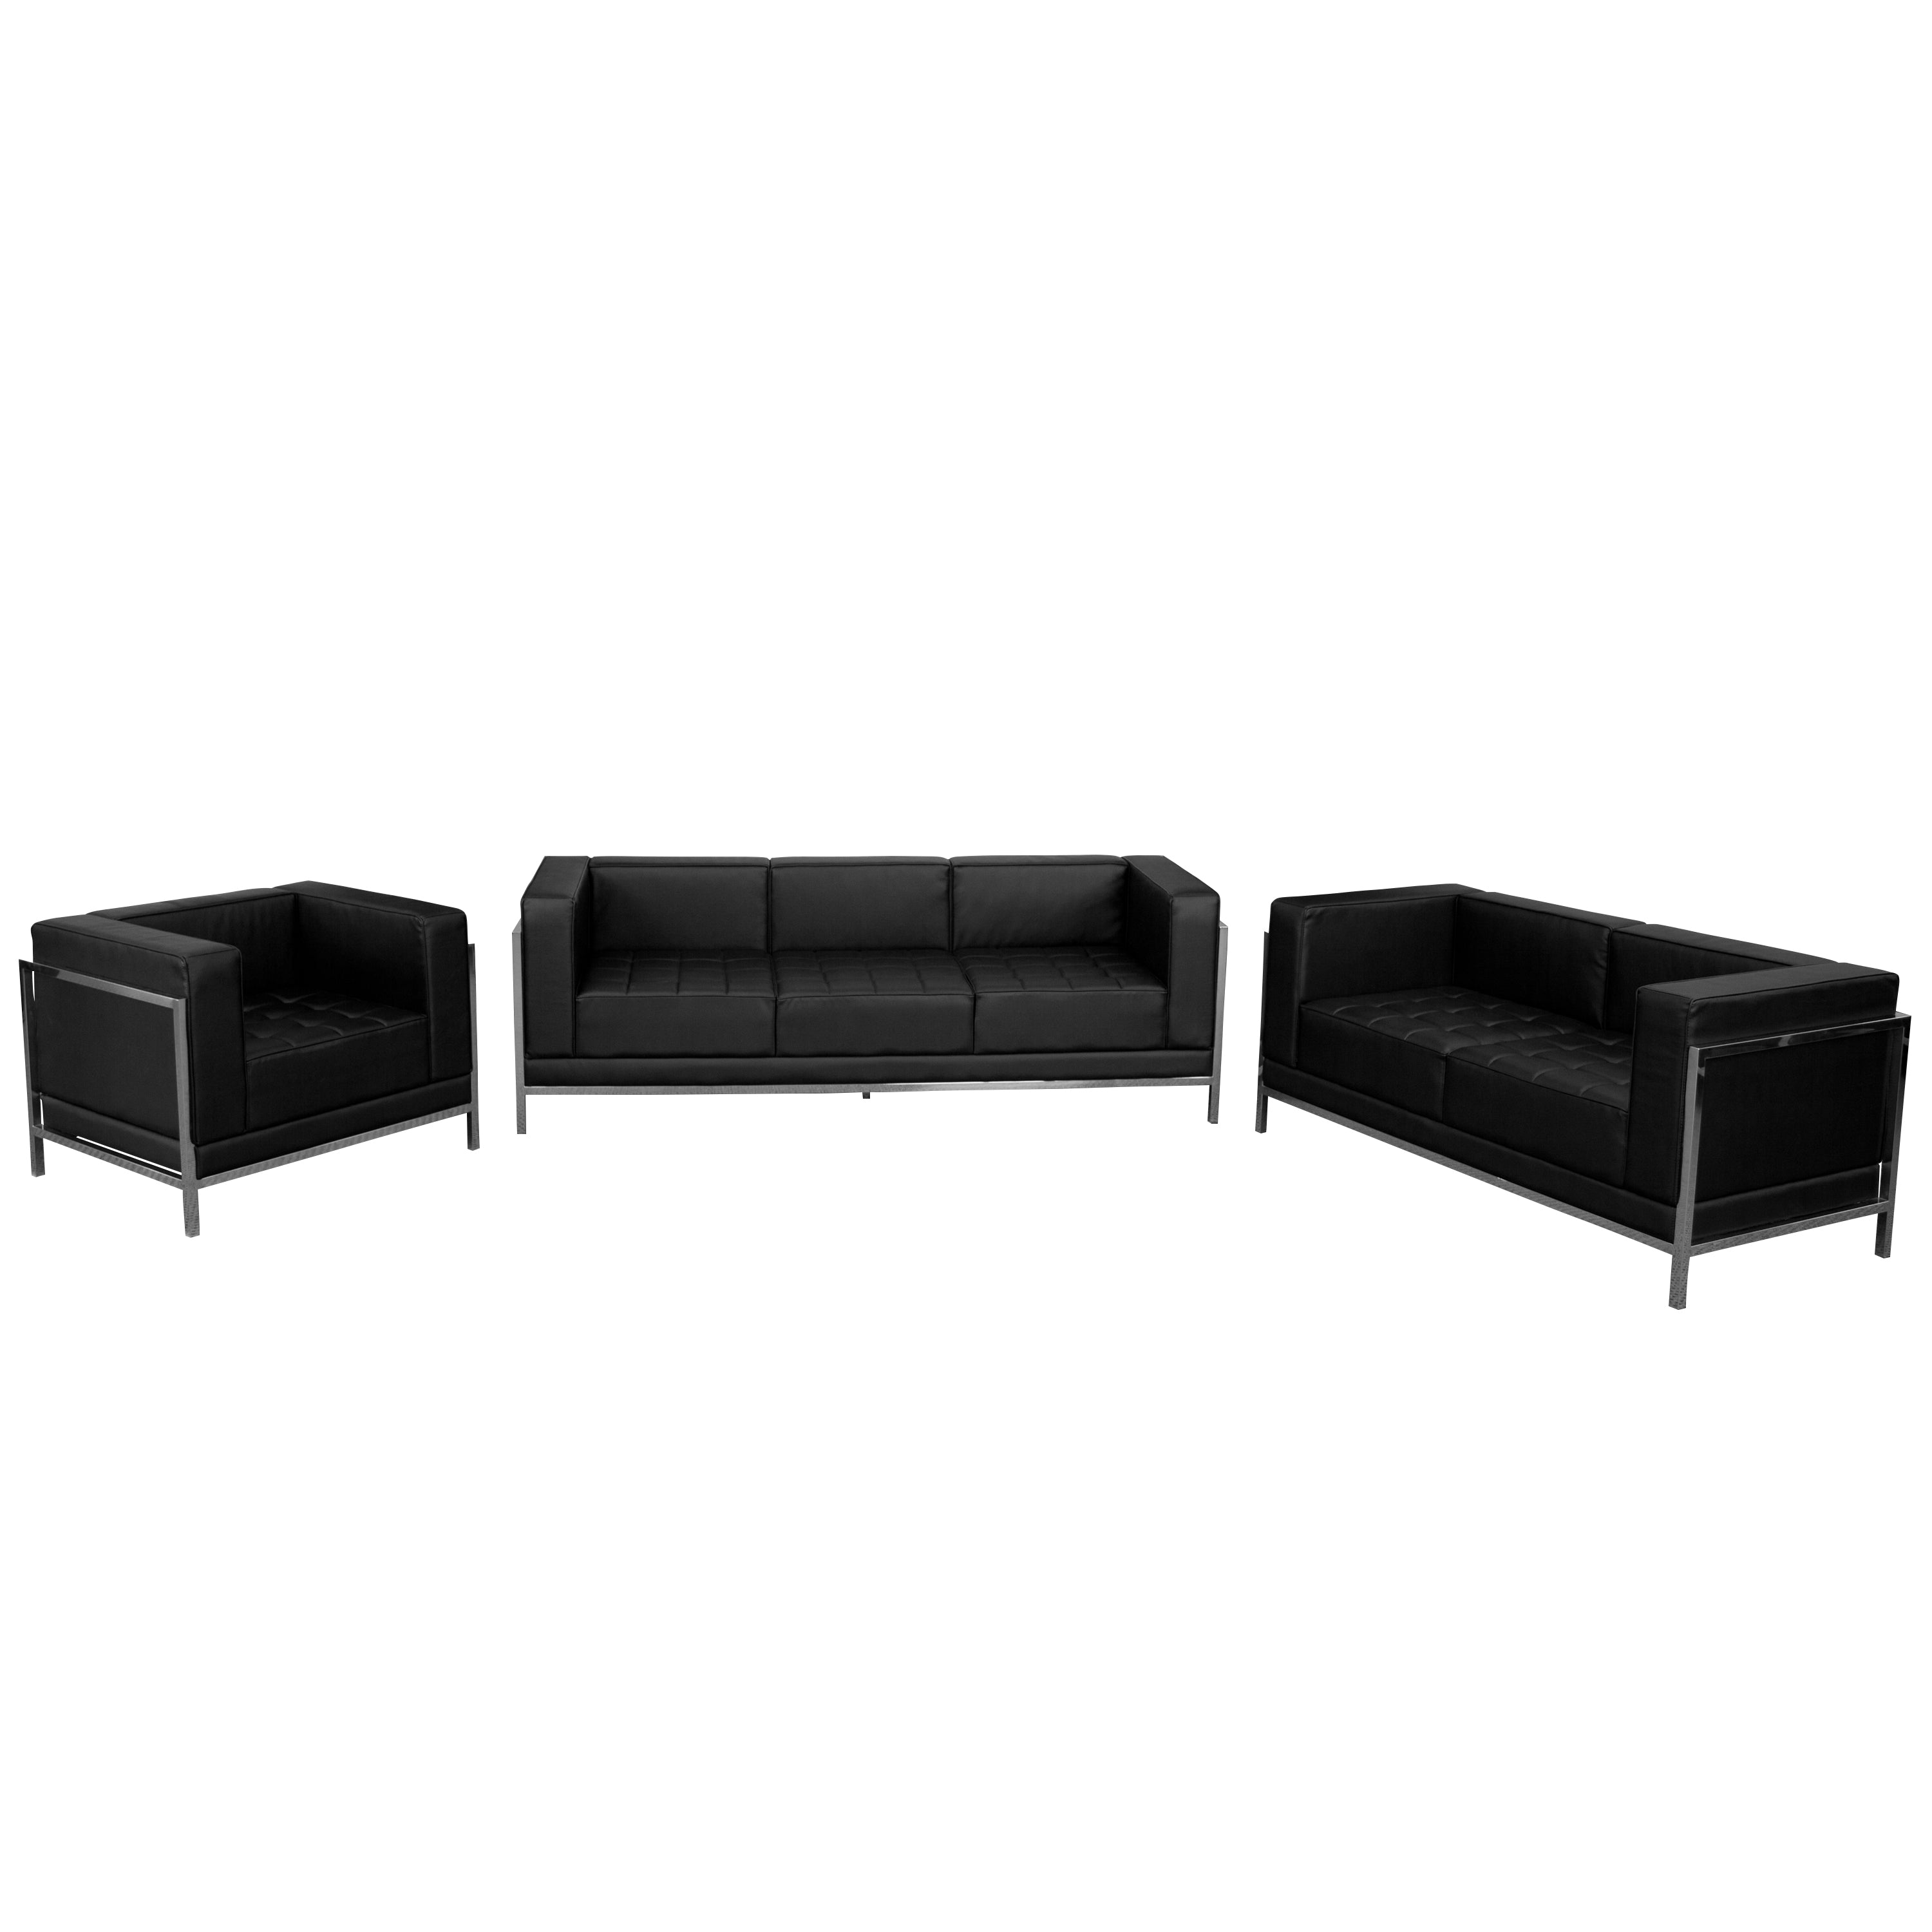 HERCULES Imagination Series LeatherSoft 3 Piece Sofa Set-Modular Reception Set-Flash Furniture-Wall2Wall Furnishings